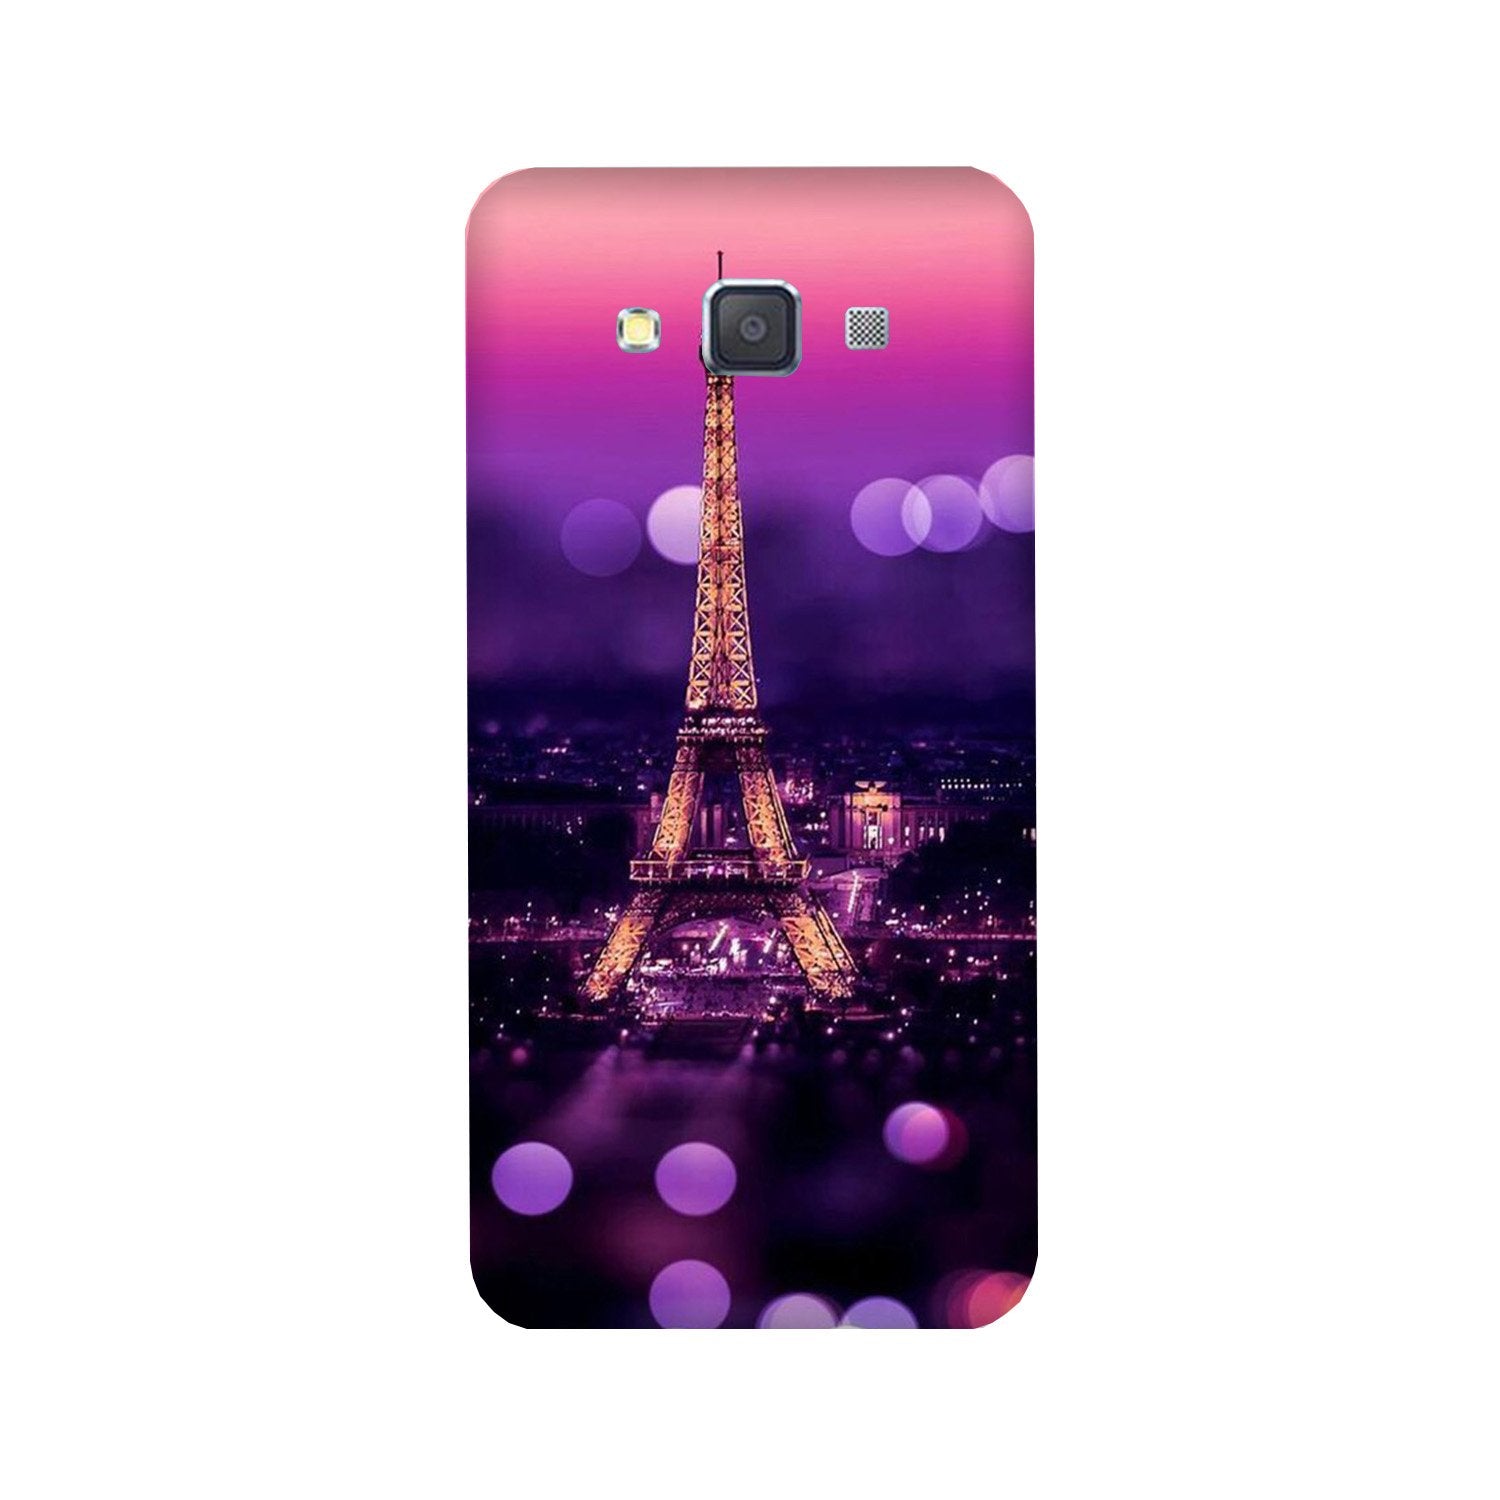 Eiffel Tower Case for Galaxy E5